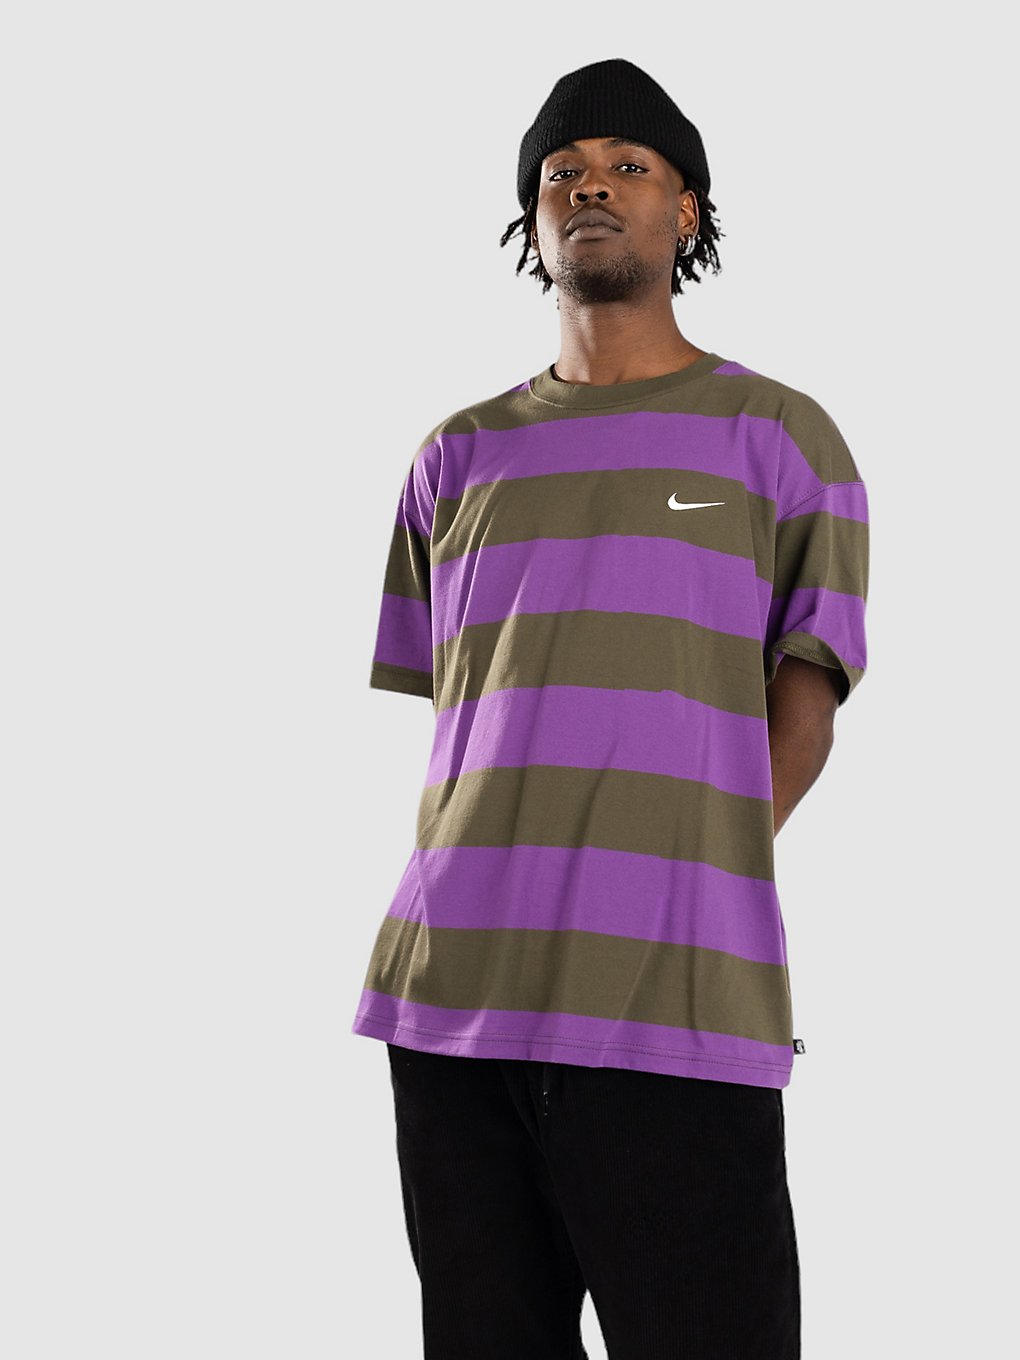 Nike Stripe T-Shirt cargo khaki kaufen